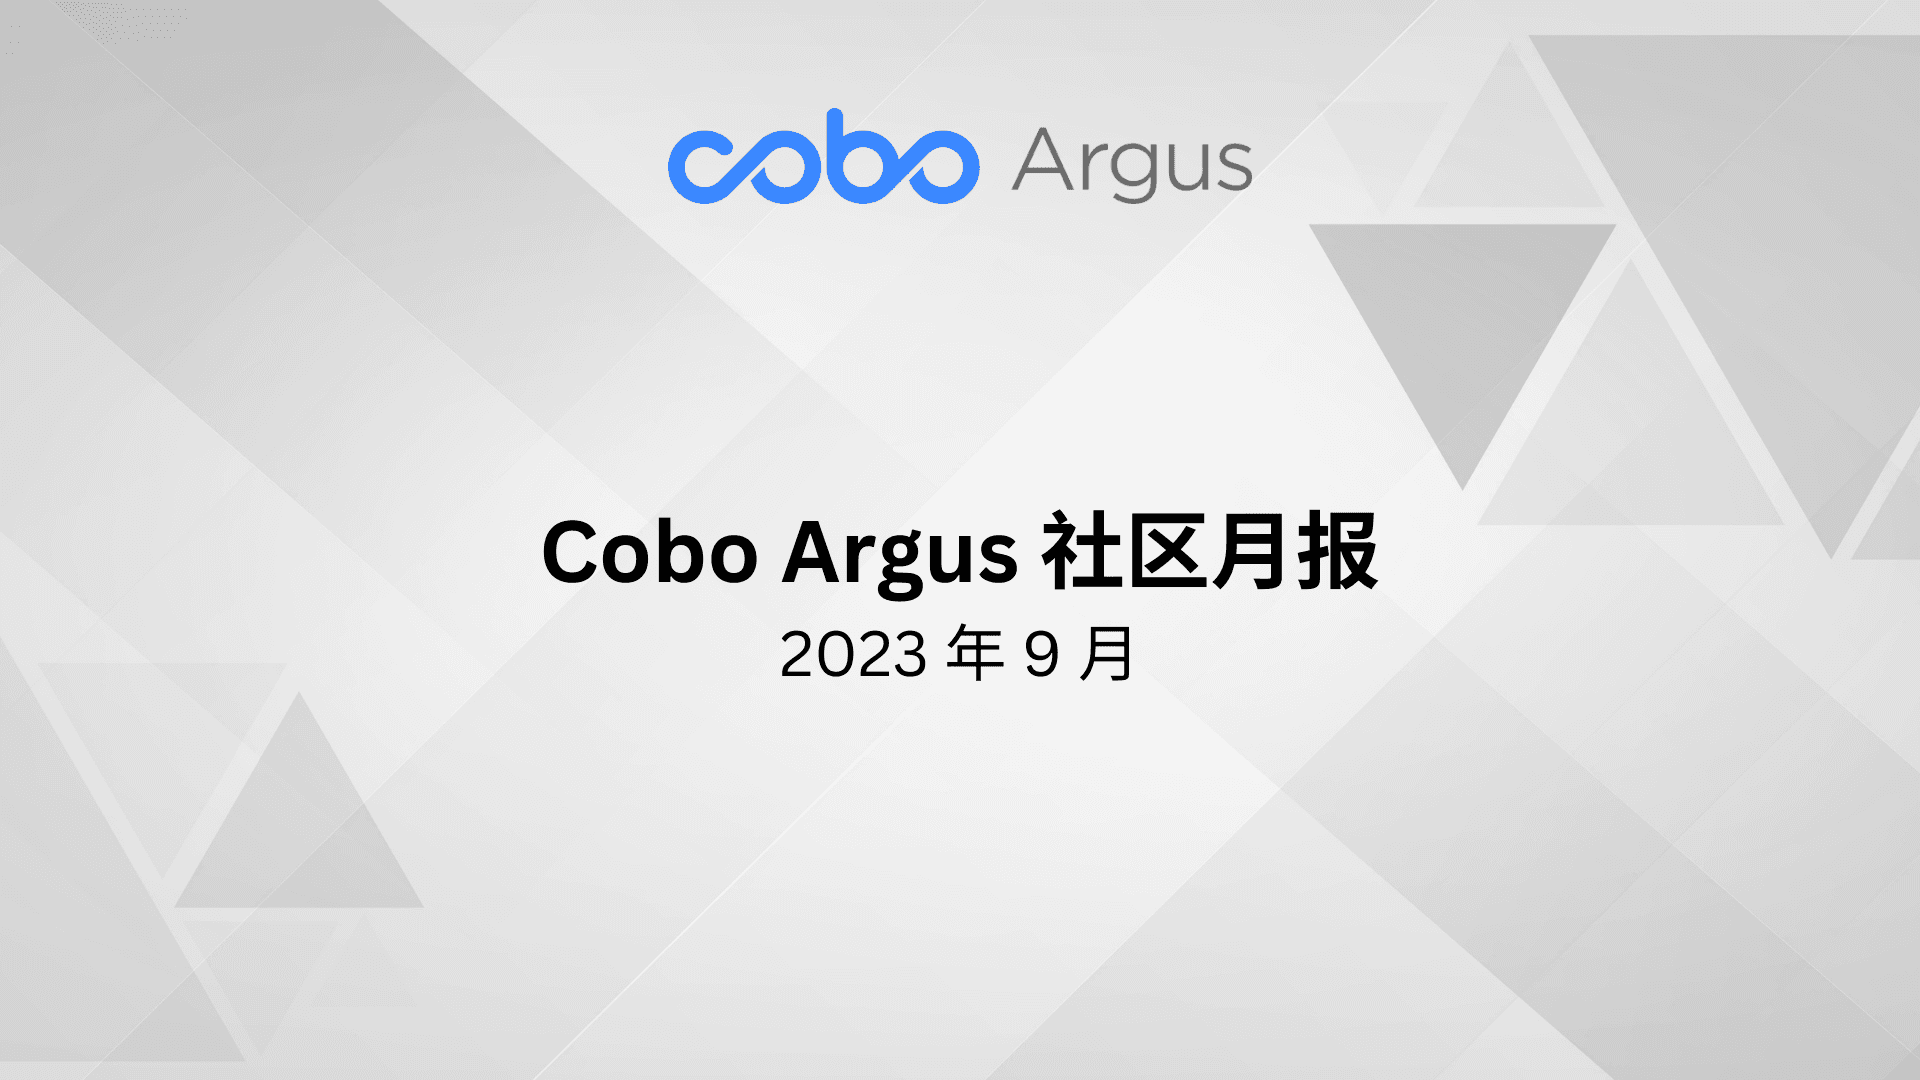 Cobo Argus 社区月报 - 2023 年 9 月